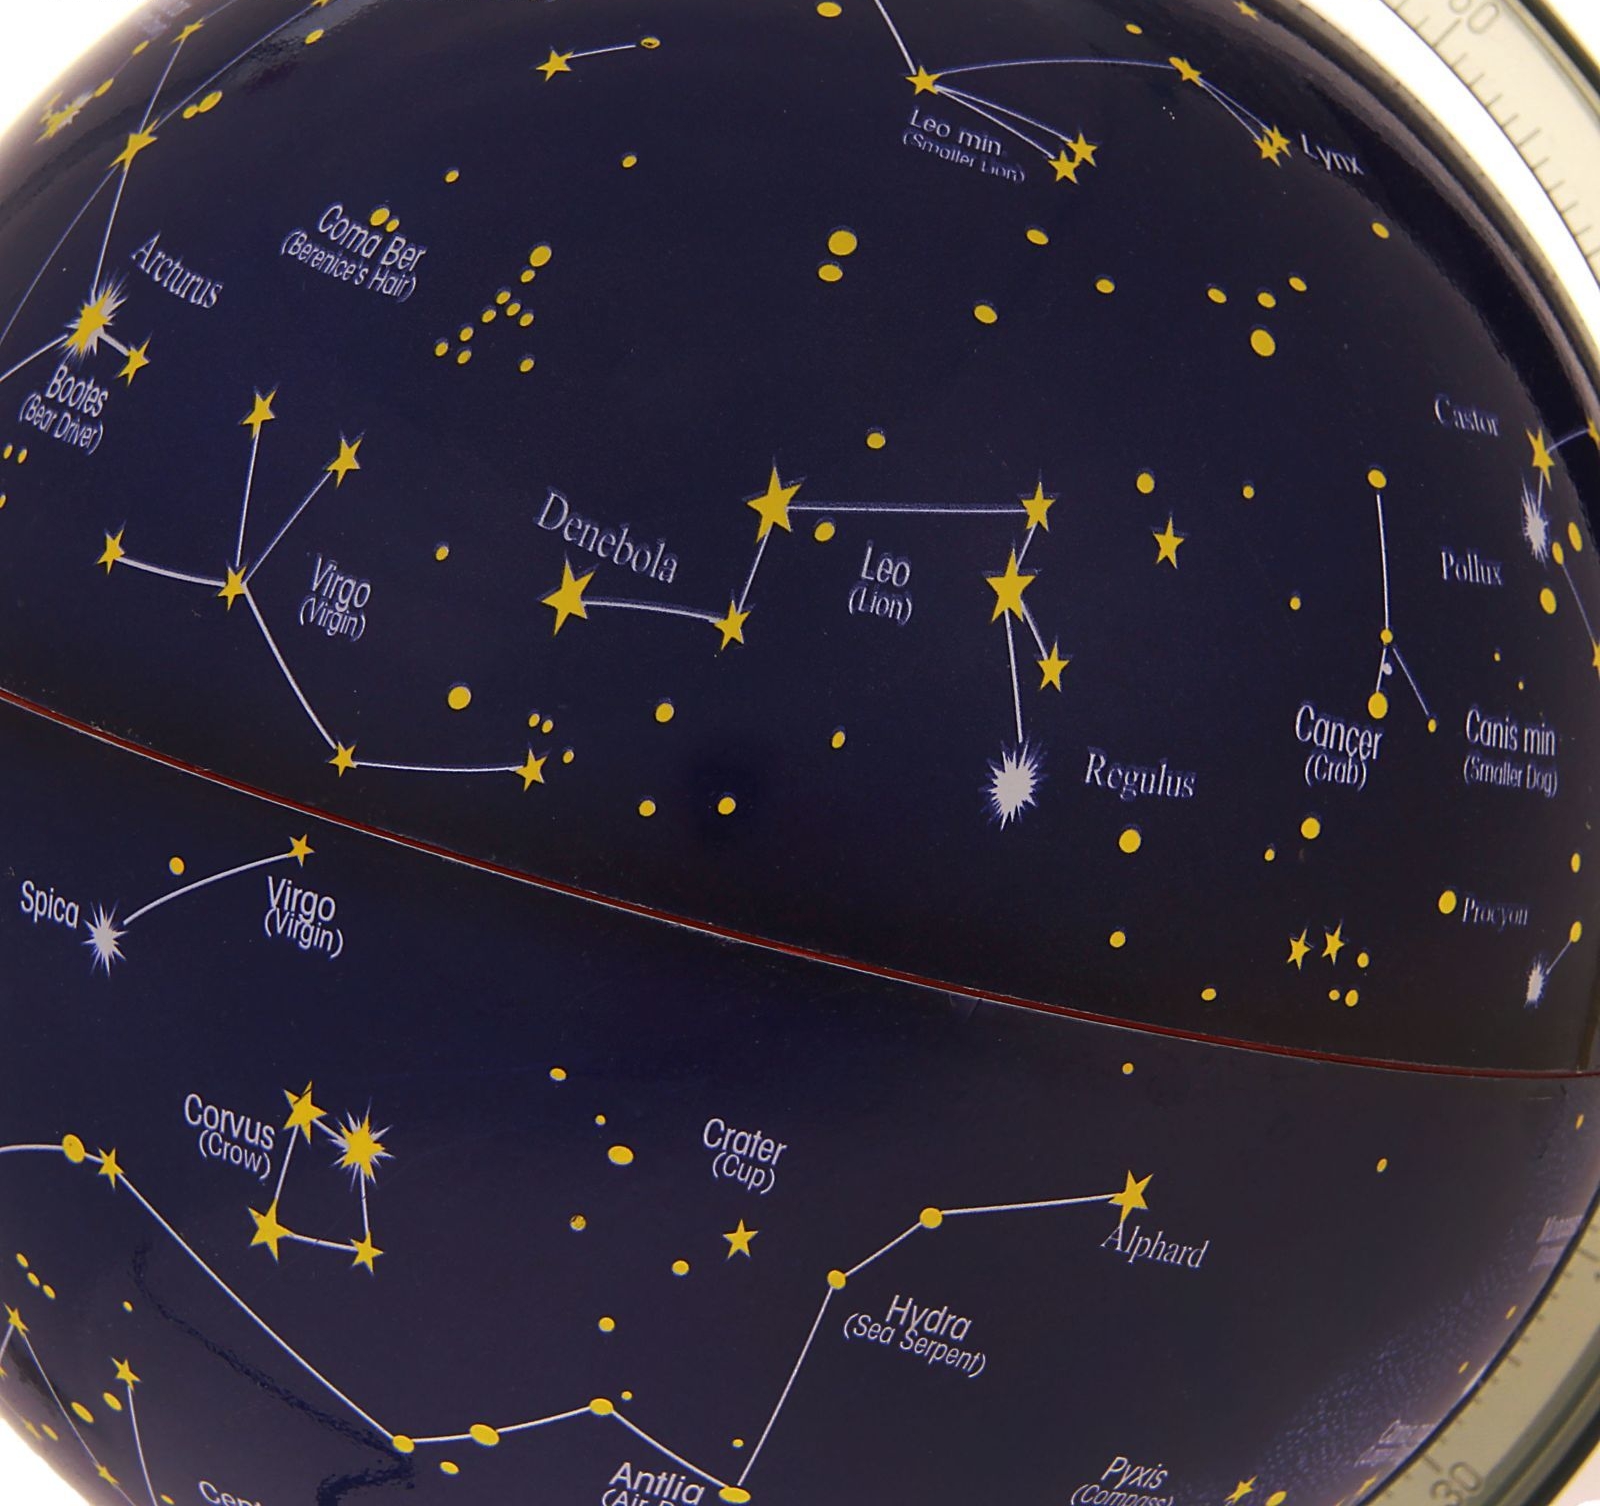 Созвездие на небосклоне. Планеты и созвездия. Созвездия на небе. Созвездия астрономия. Карта неба.